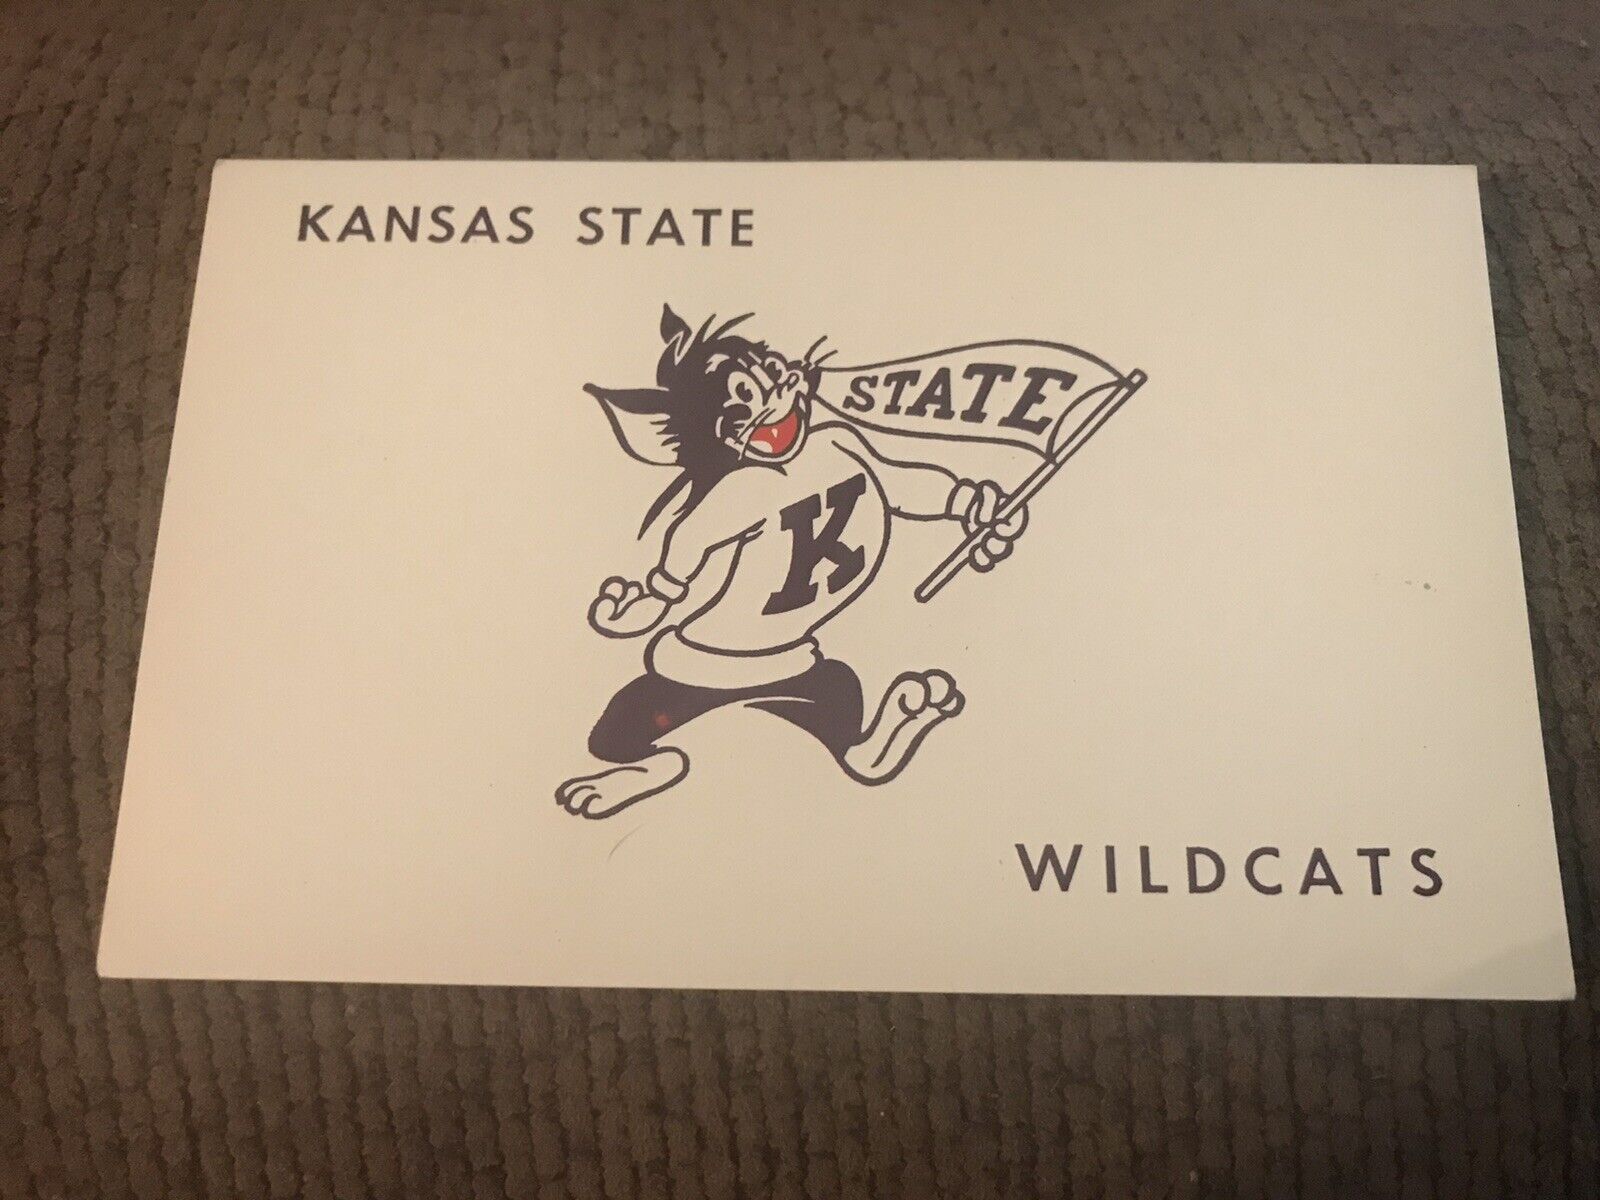 KS Manhattan Kansas K State University Wildcats Postcard